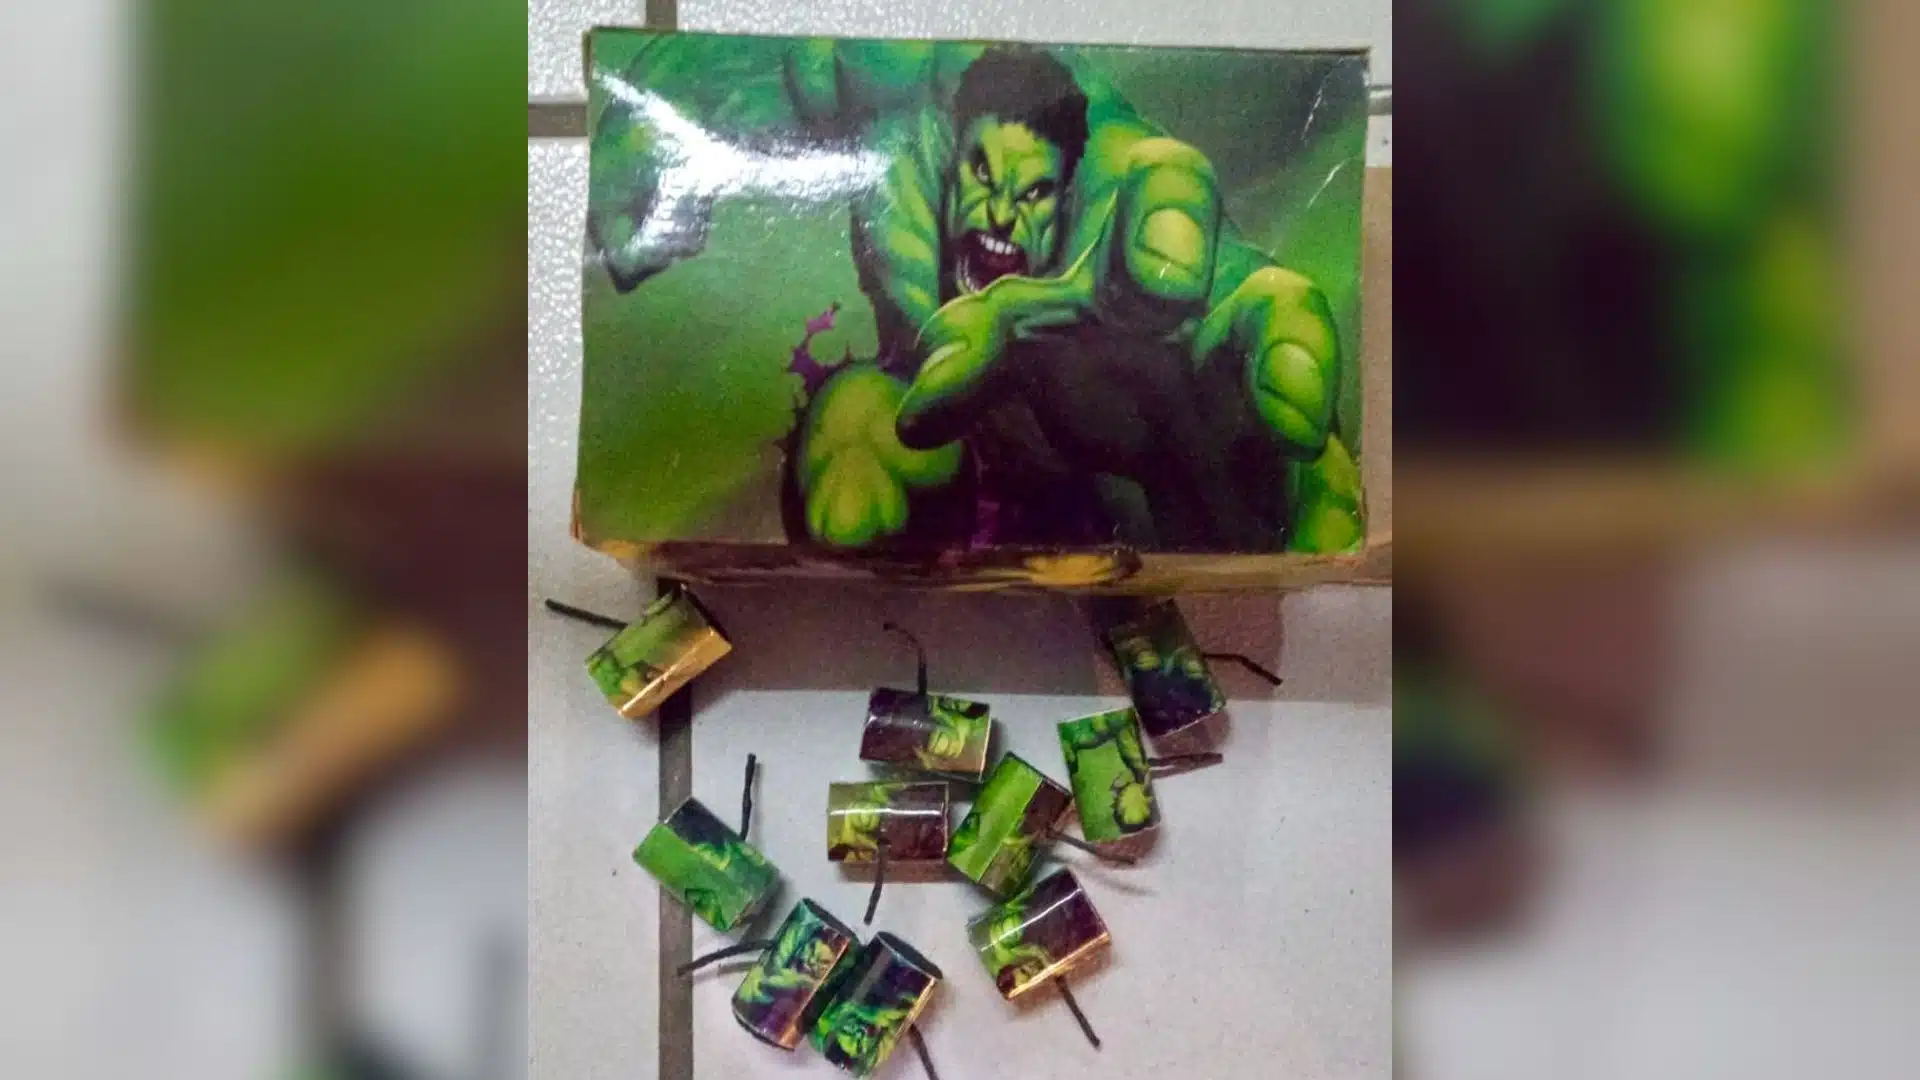 A los hombres les aseguraron 10 artefactos conocidos como “Hulk”.